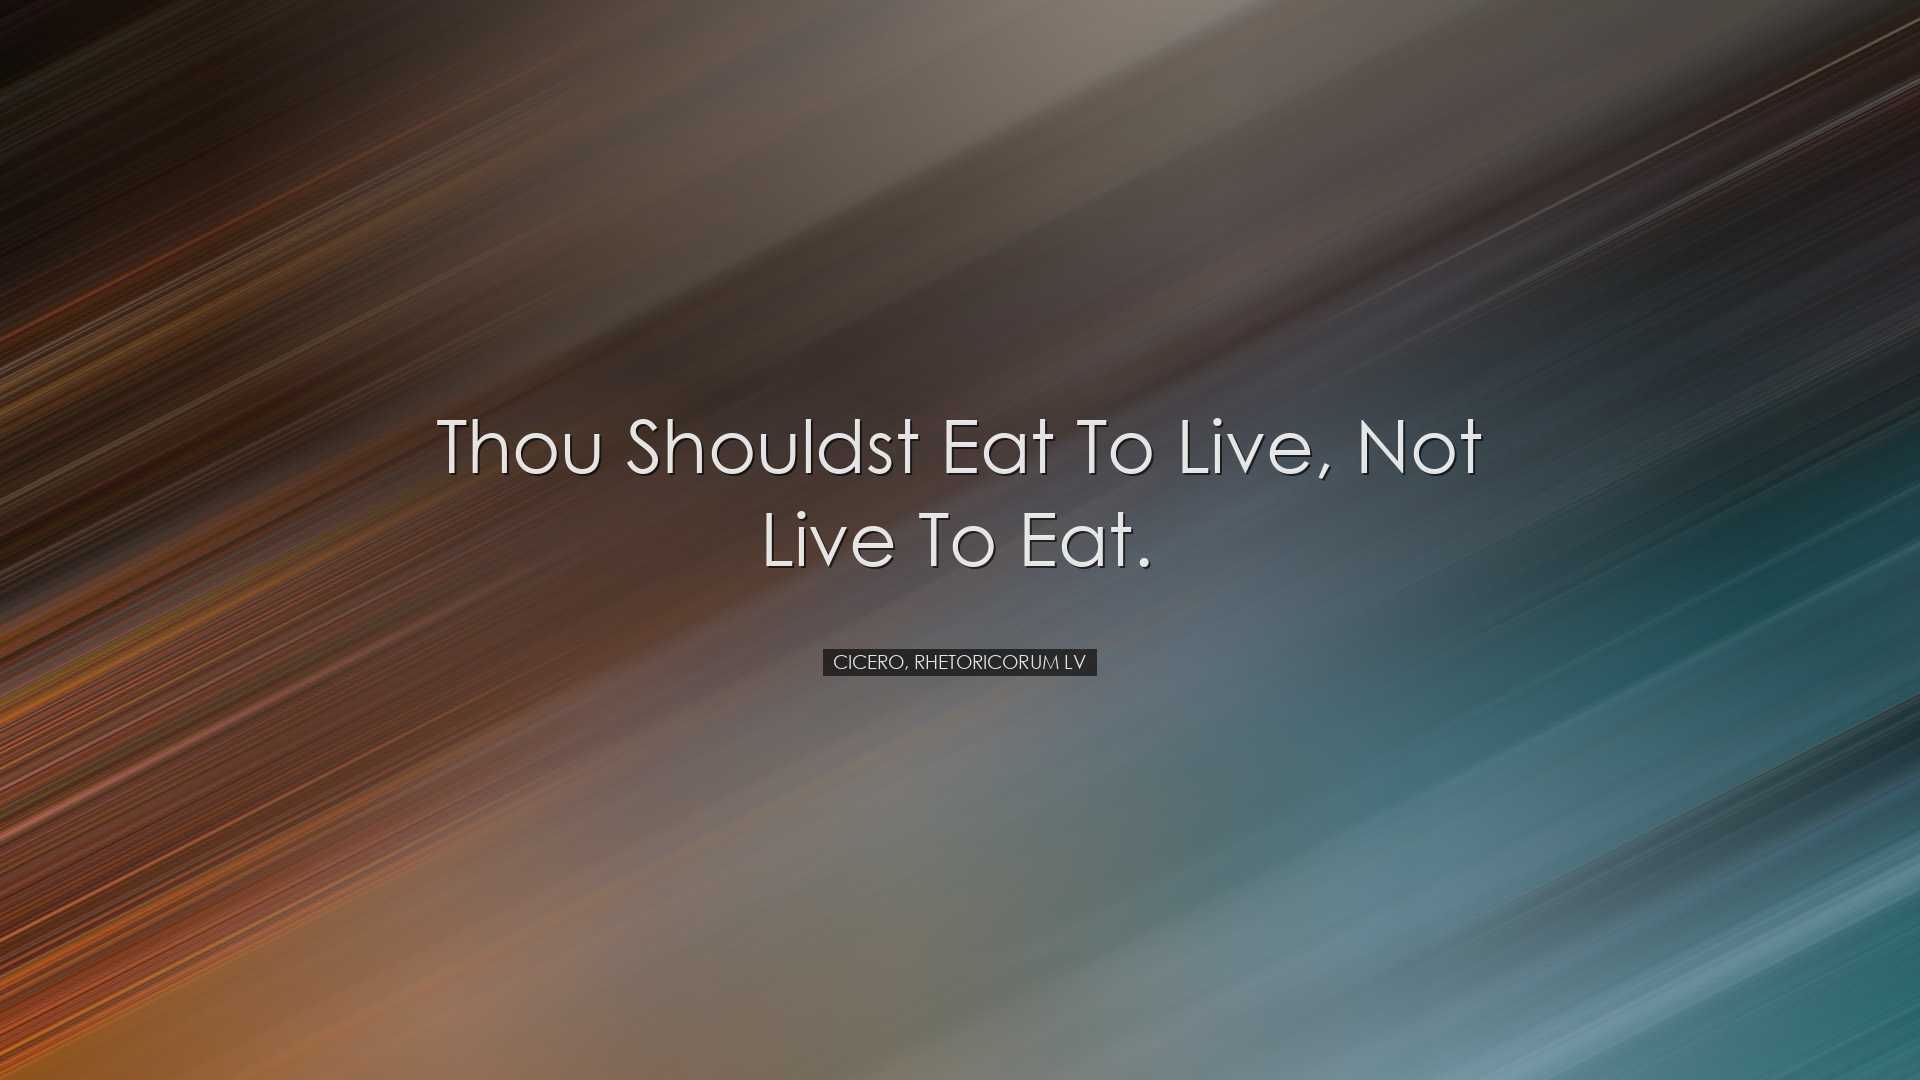 Thou shouldst eat to live, not live to eat. - Cicero, Rhetoricorum